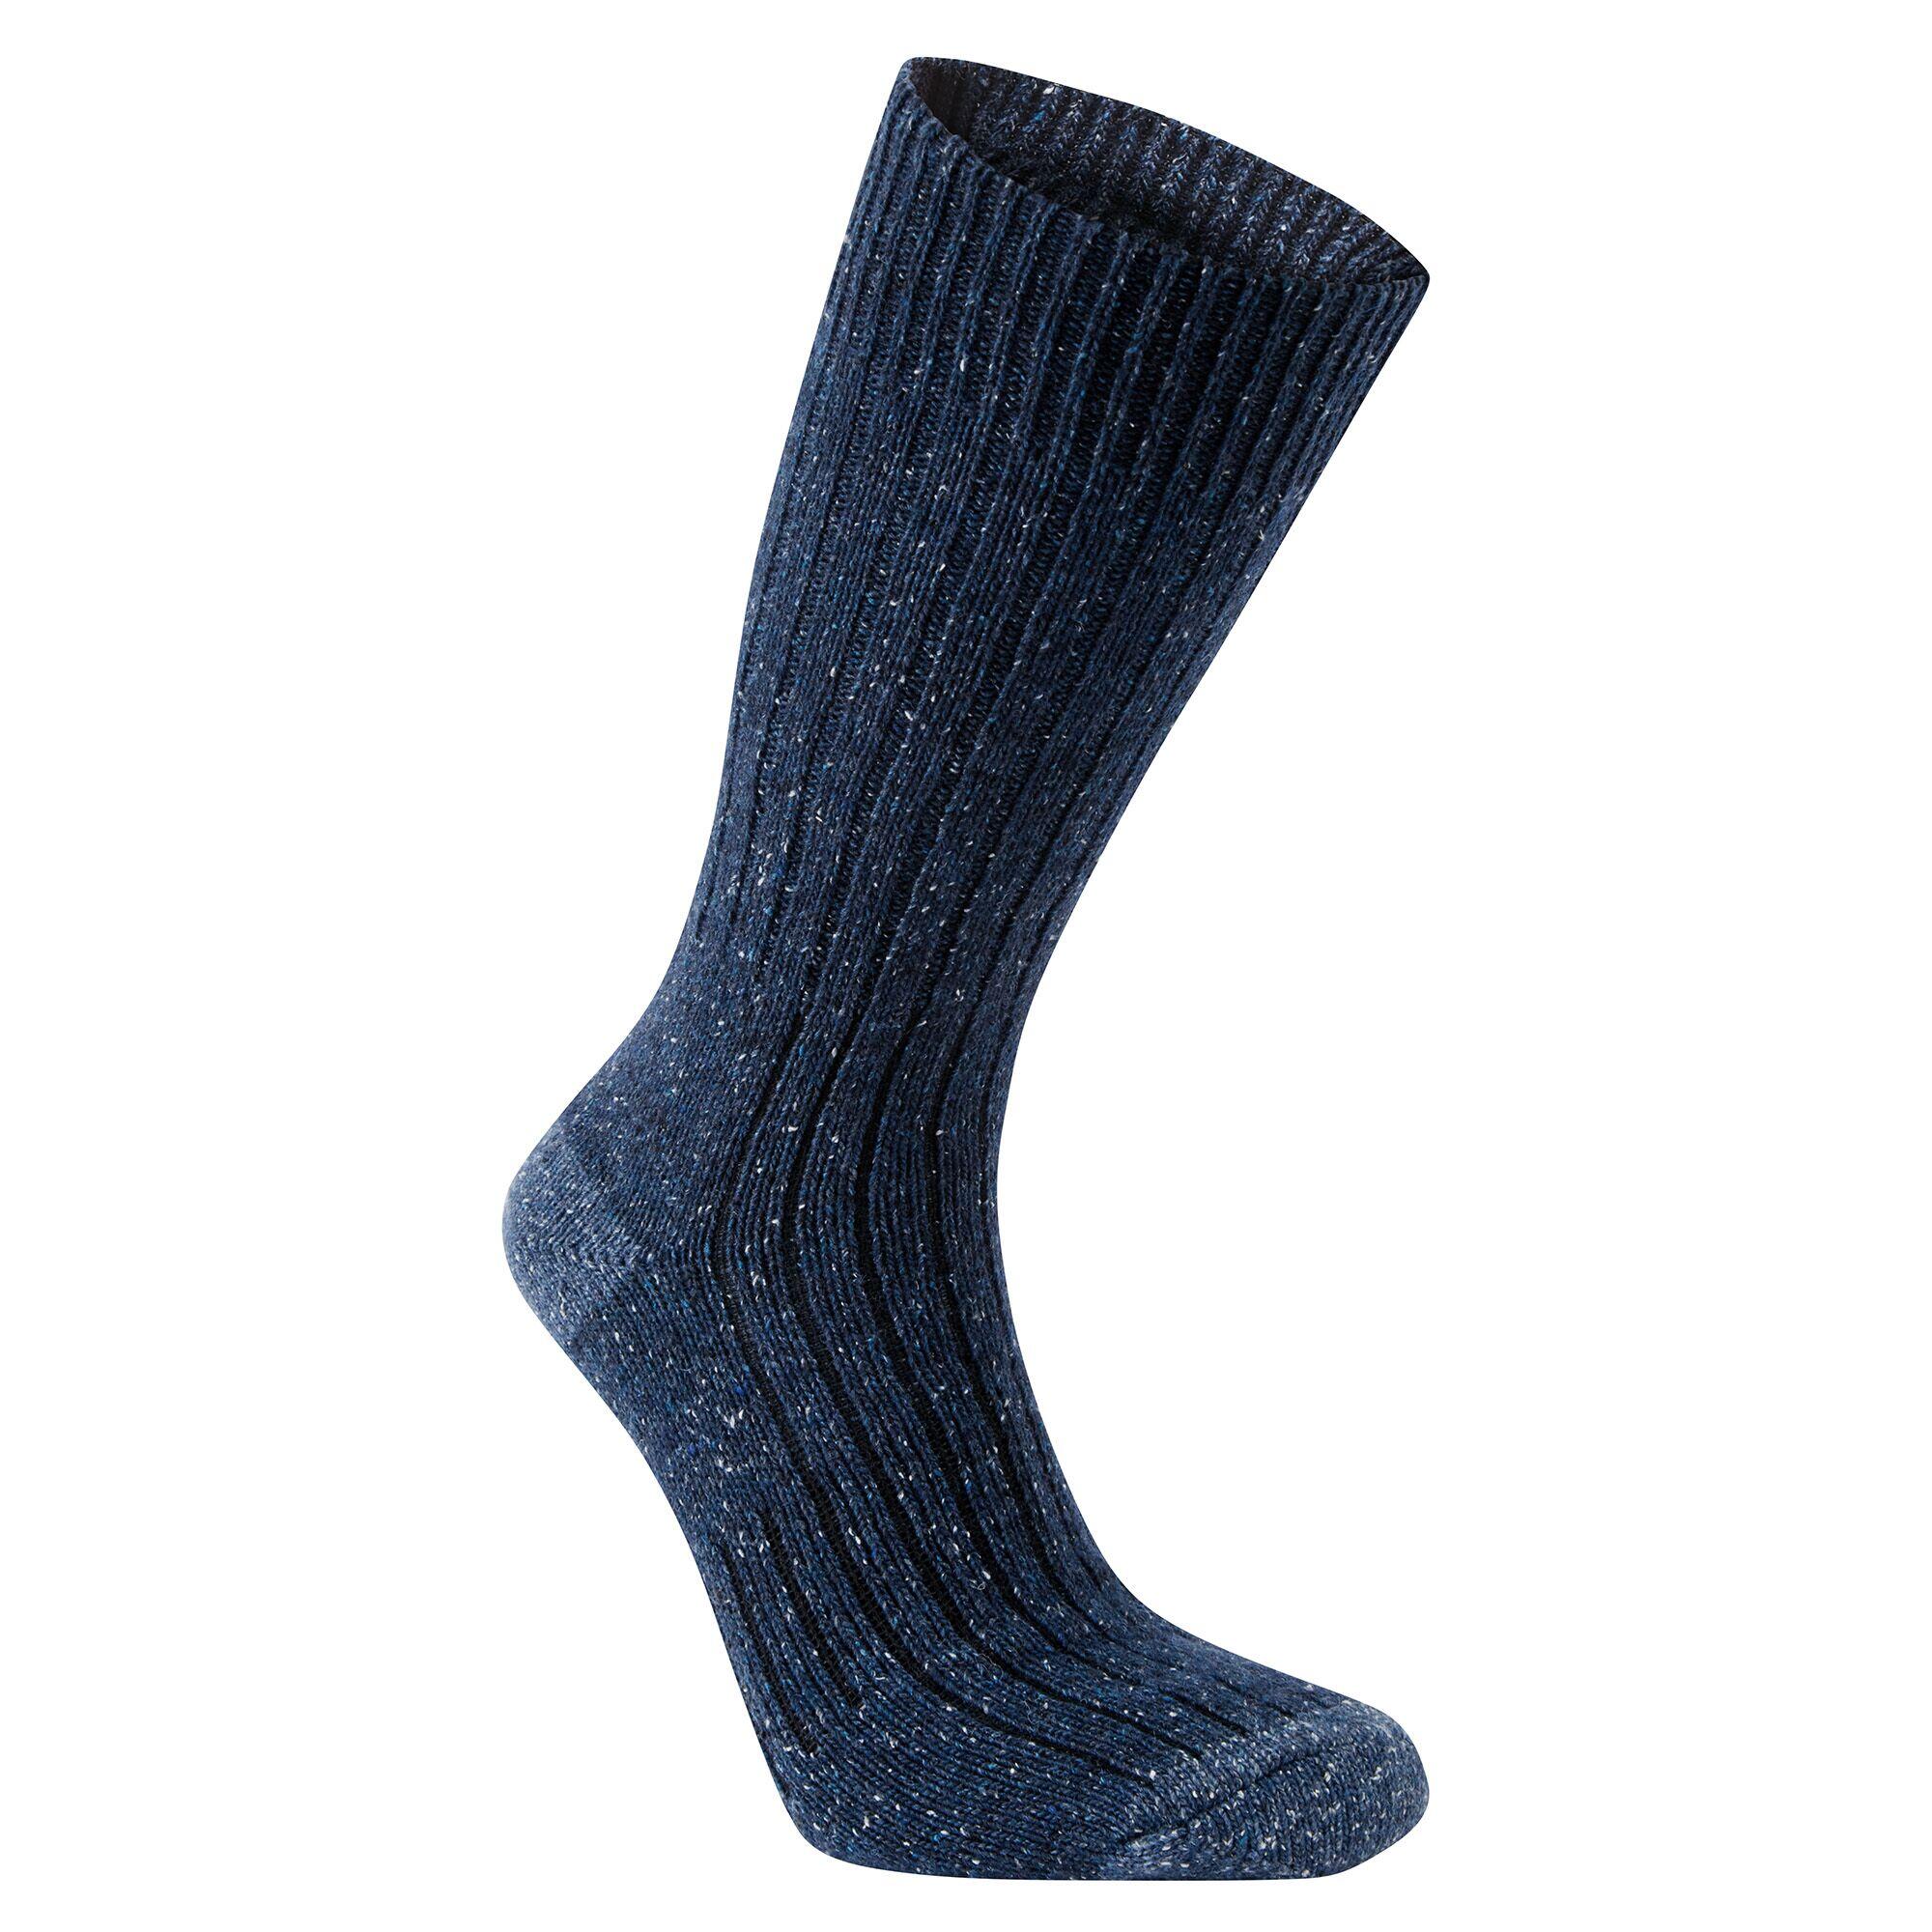 CRAGHOPPERS Glencoe Walking Socks